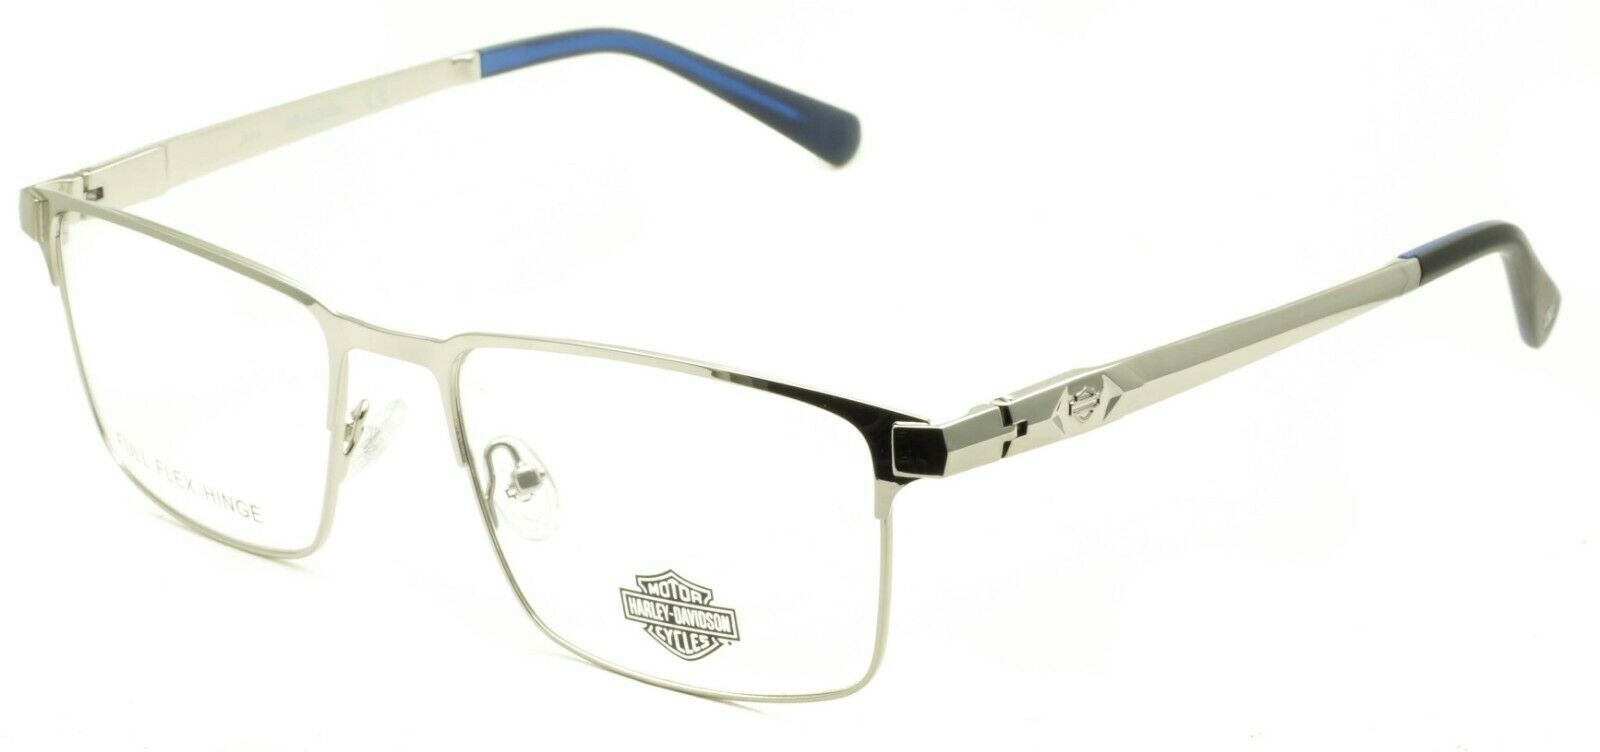 HARLEY-DAVIDSON HD0786 010 55mm Eyewear FRAMES RX Optical Eyeglasses  Glasses New - GGV Eyewear